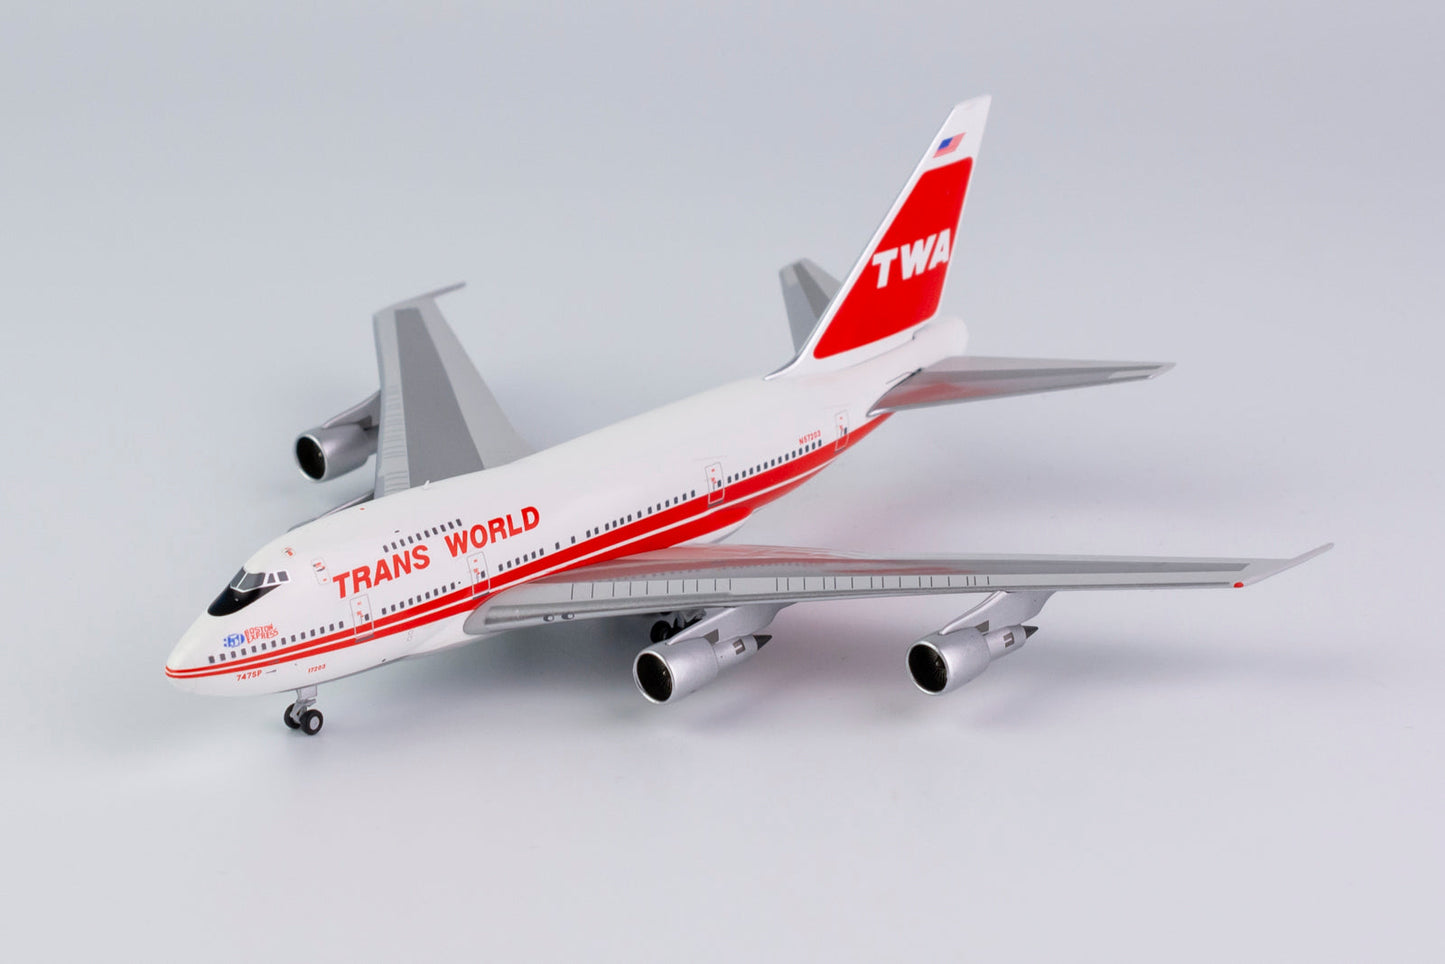 1/400 Trans World Airlines (TWA) B 747SP "Boston Express" NG Models 07020s/d1 *Defective model*